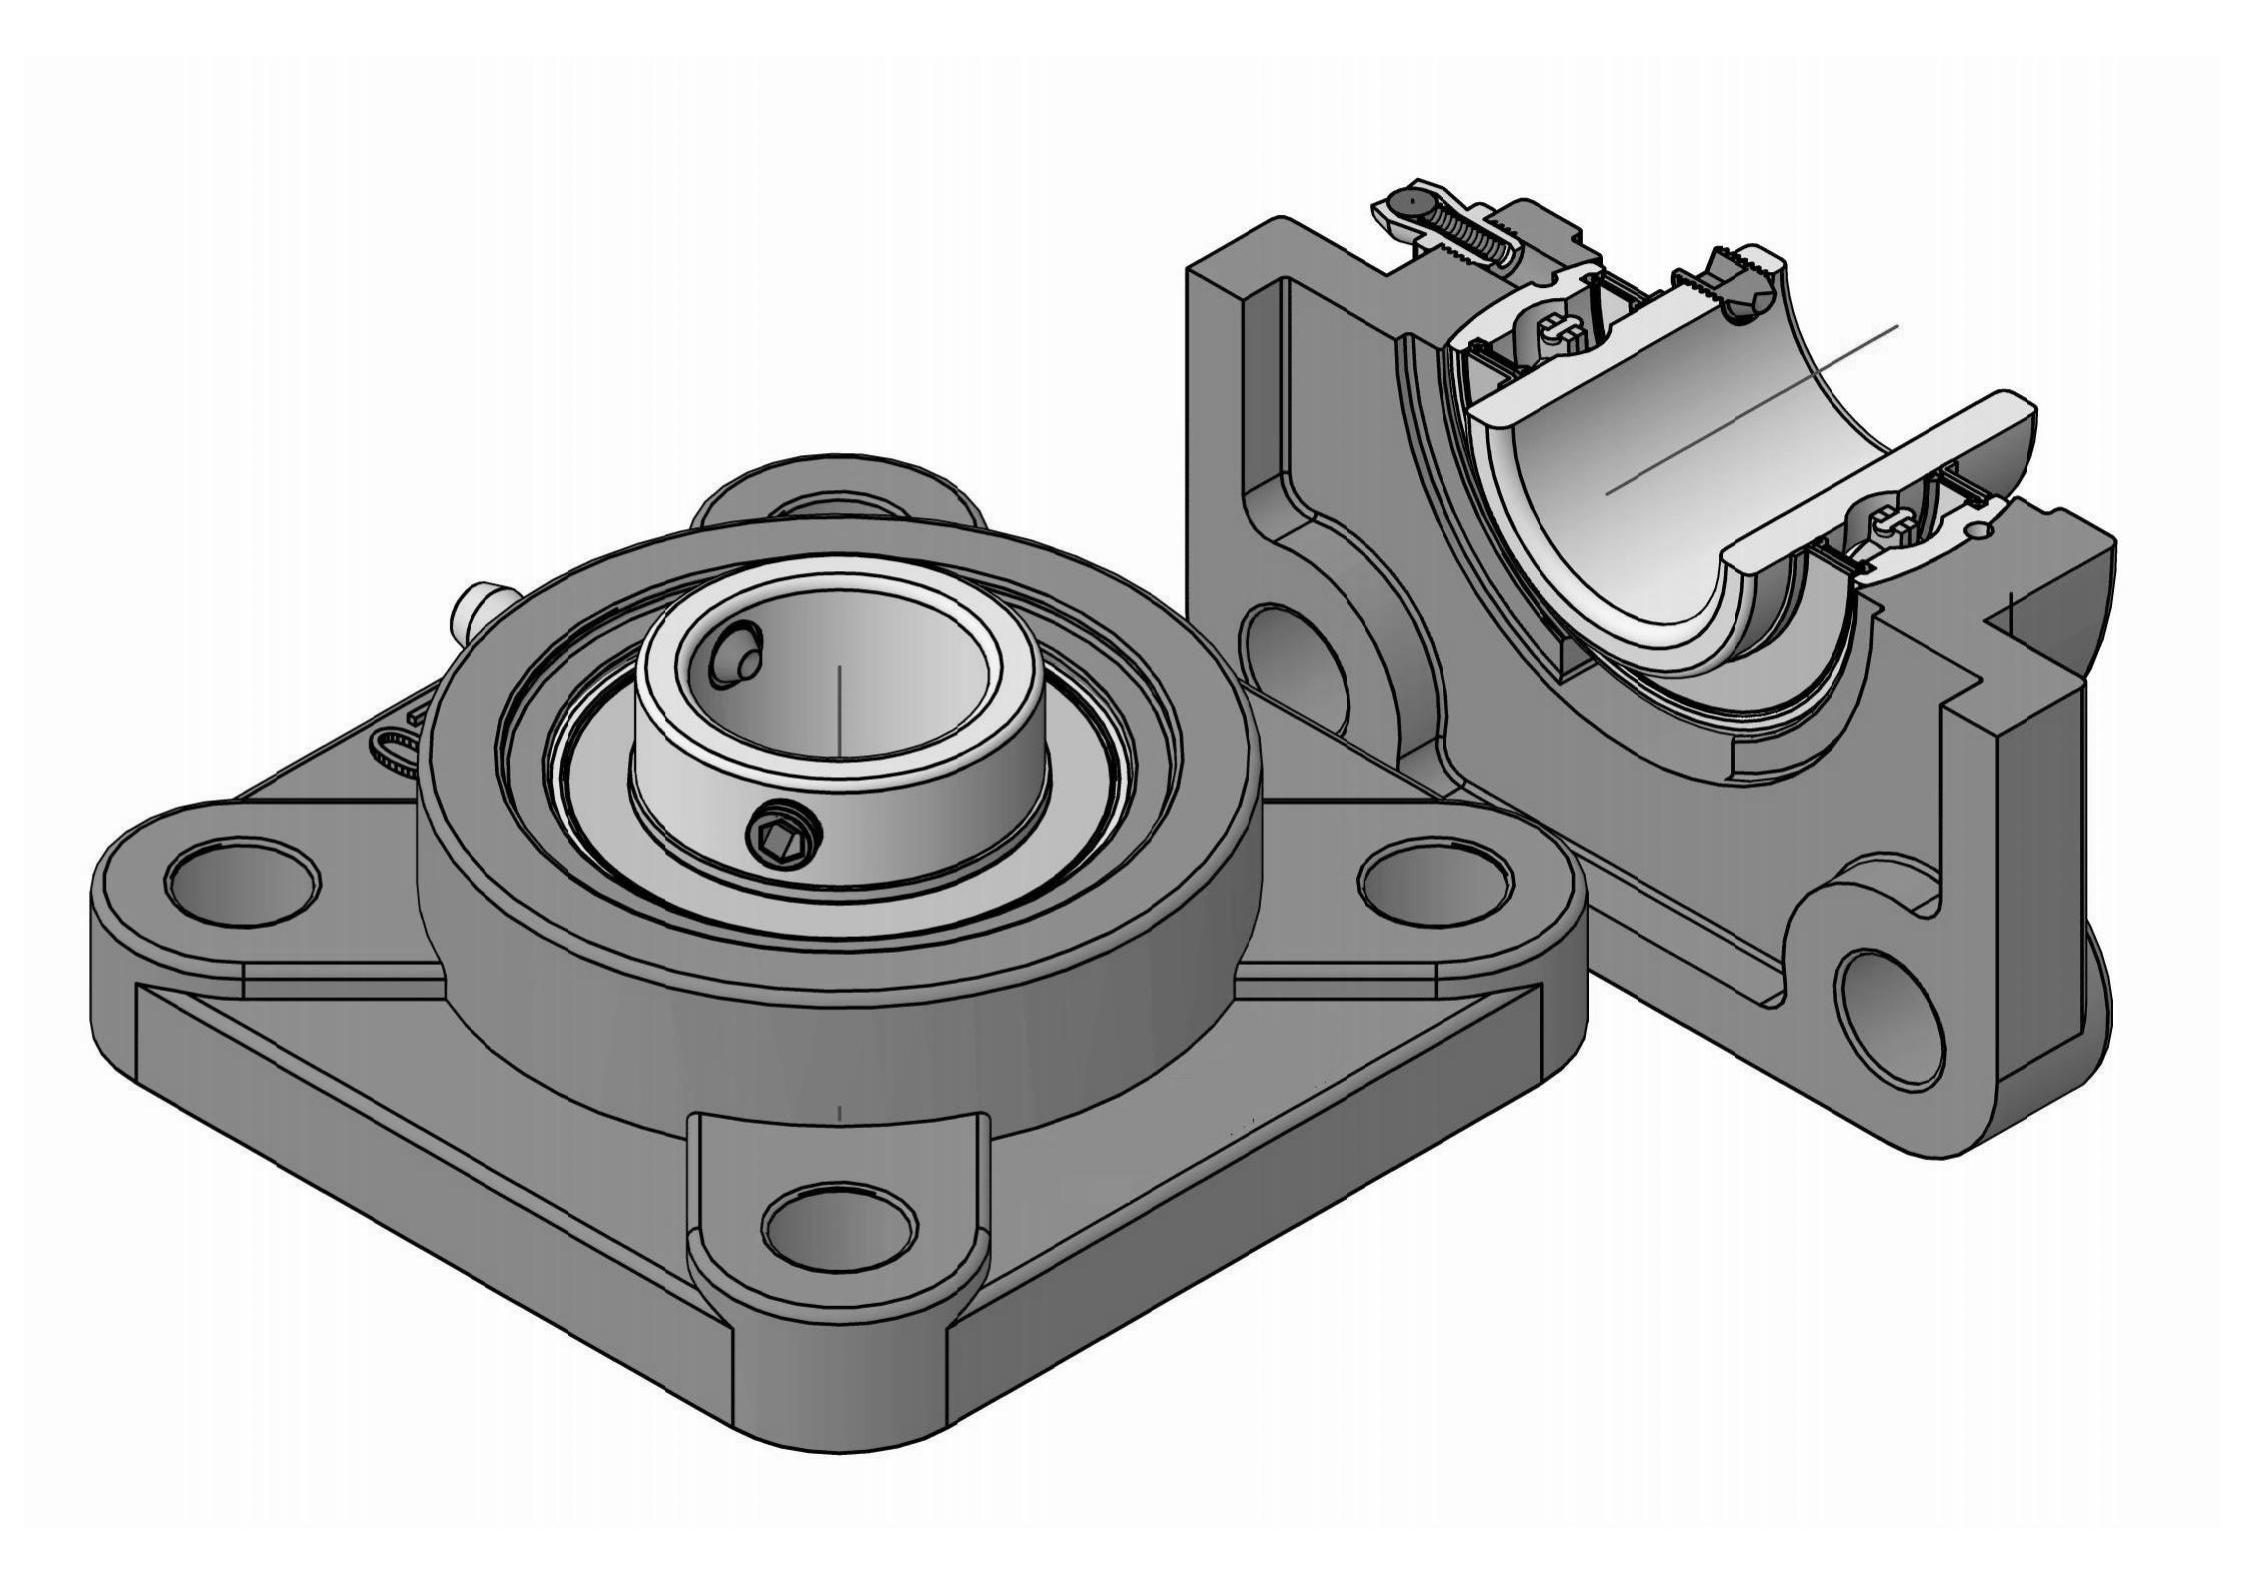 UCFX15-48 bốn bộ phận vòng bi mặt bích Bolt Square có lỗ khoan 3 inch